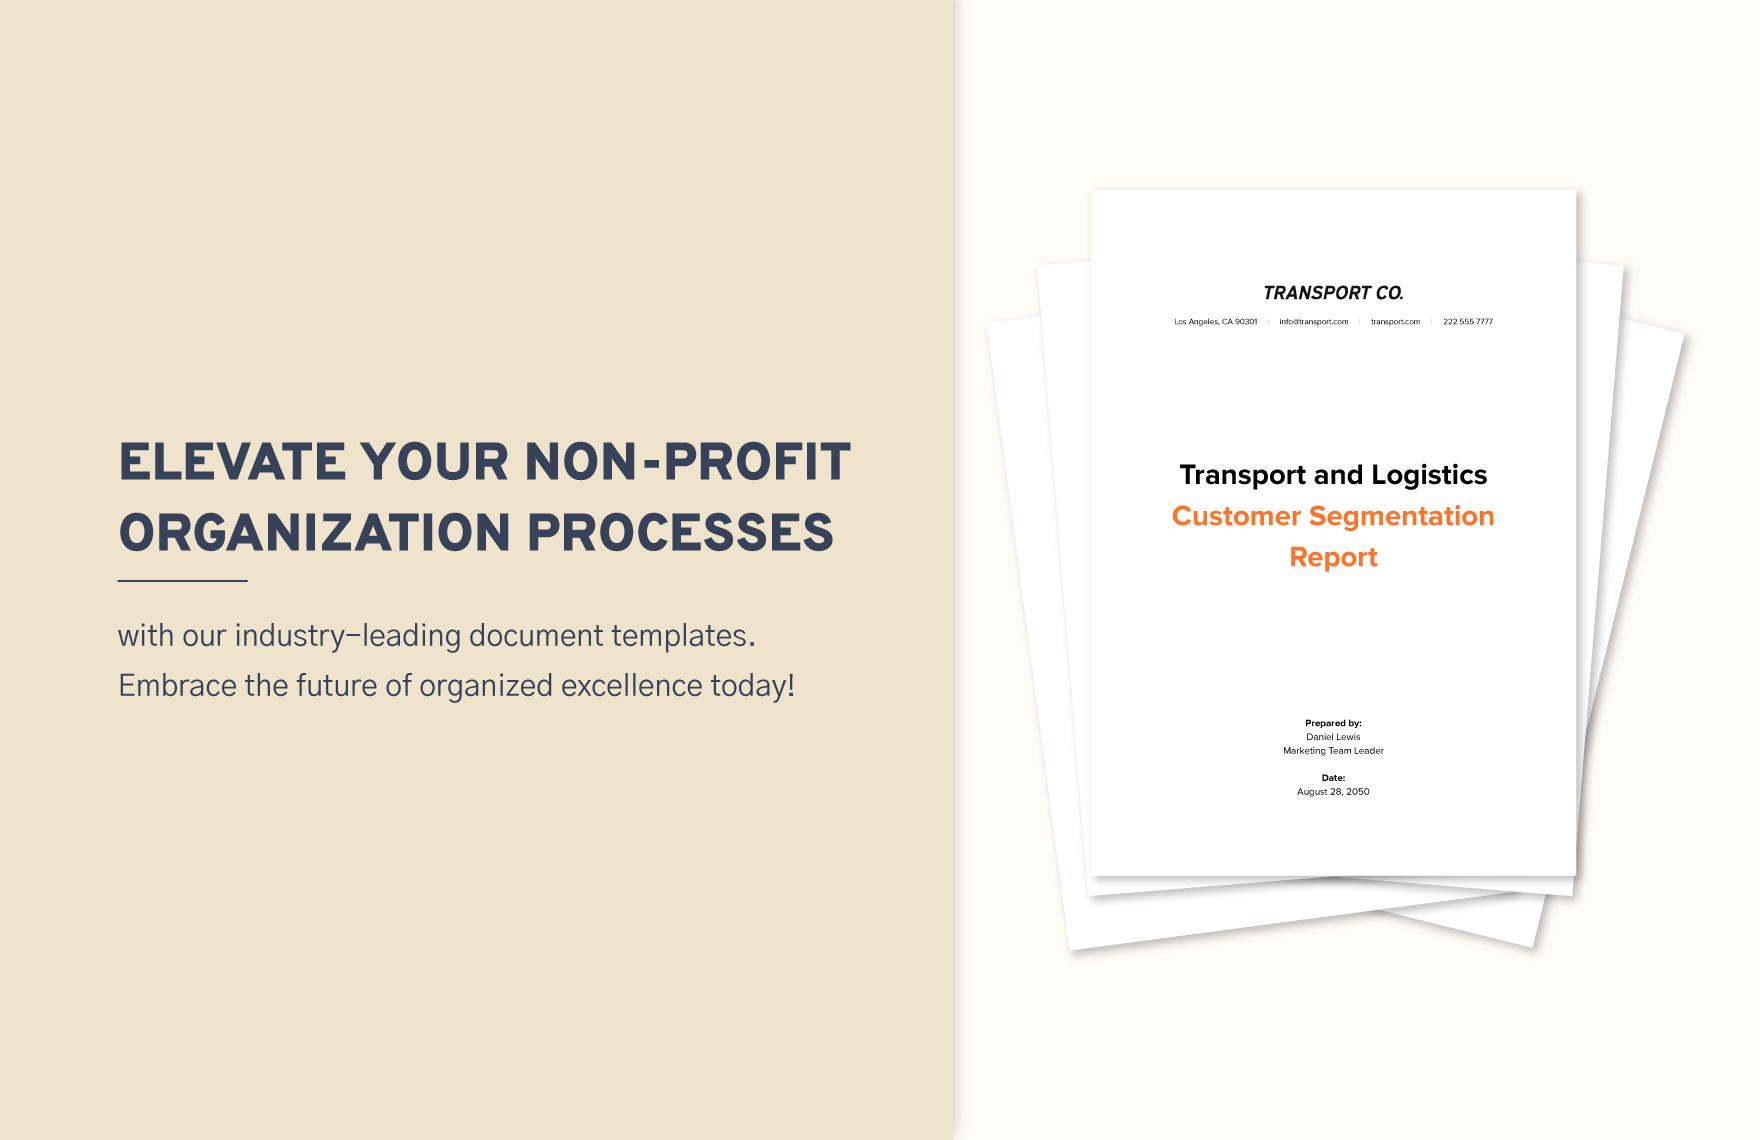 Transport and Logistics Customer Segmentation Report Template